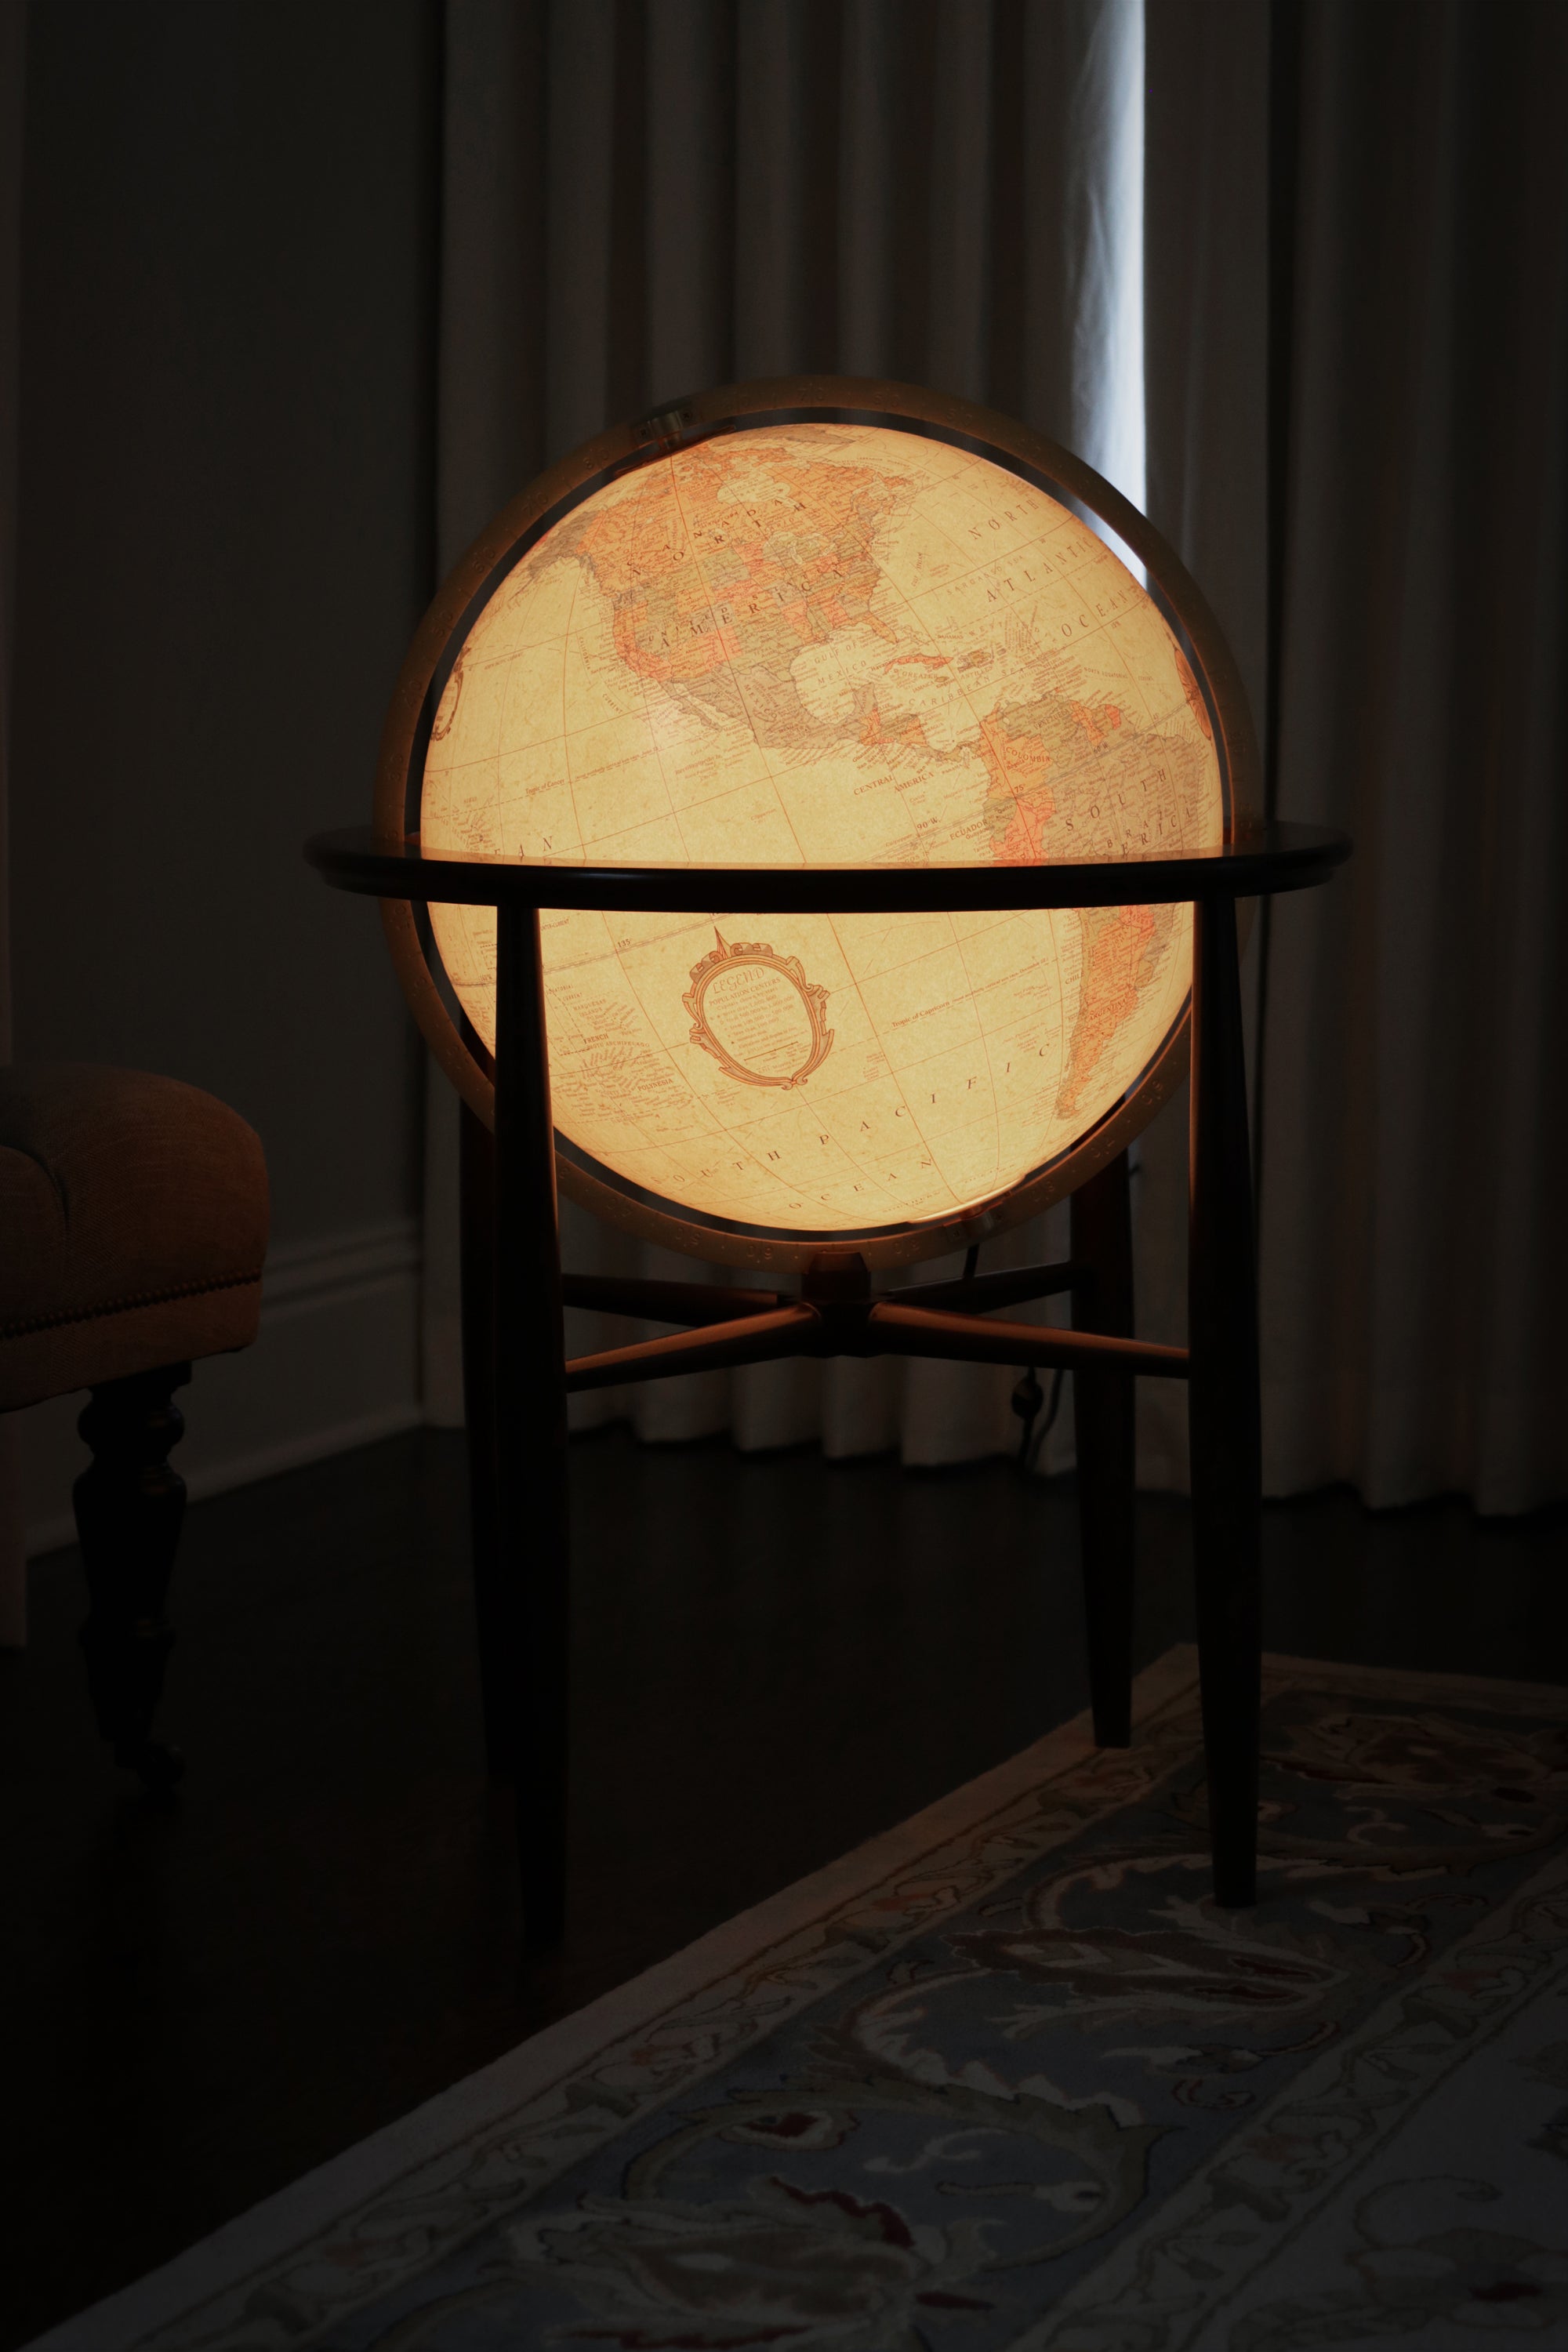 Finley Antique Illuminated 20 Inch Floor World Globe By Replogle Globes